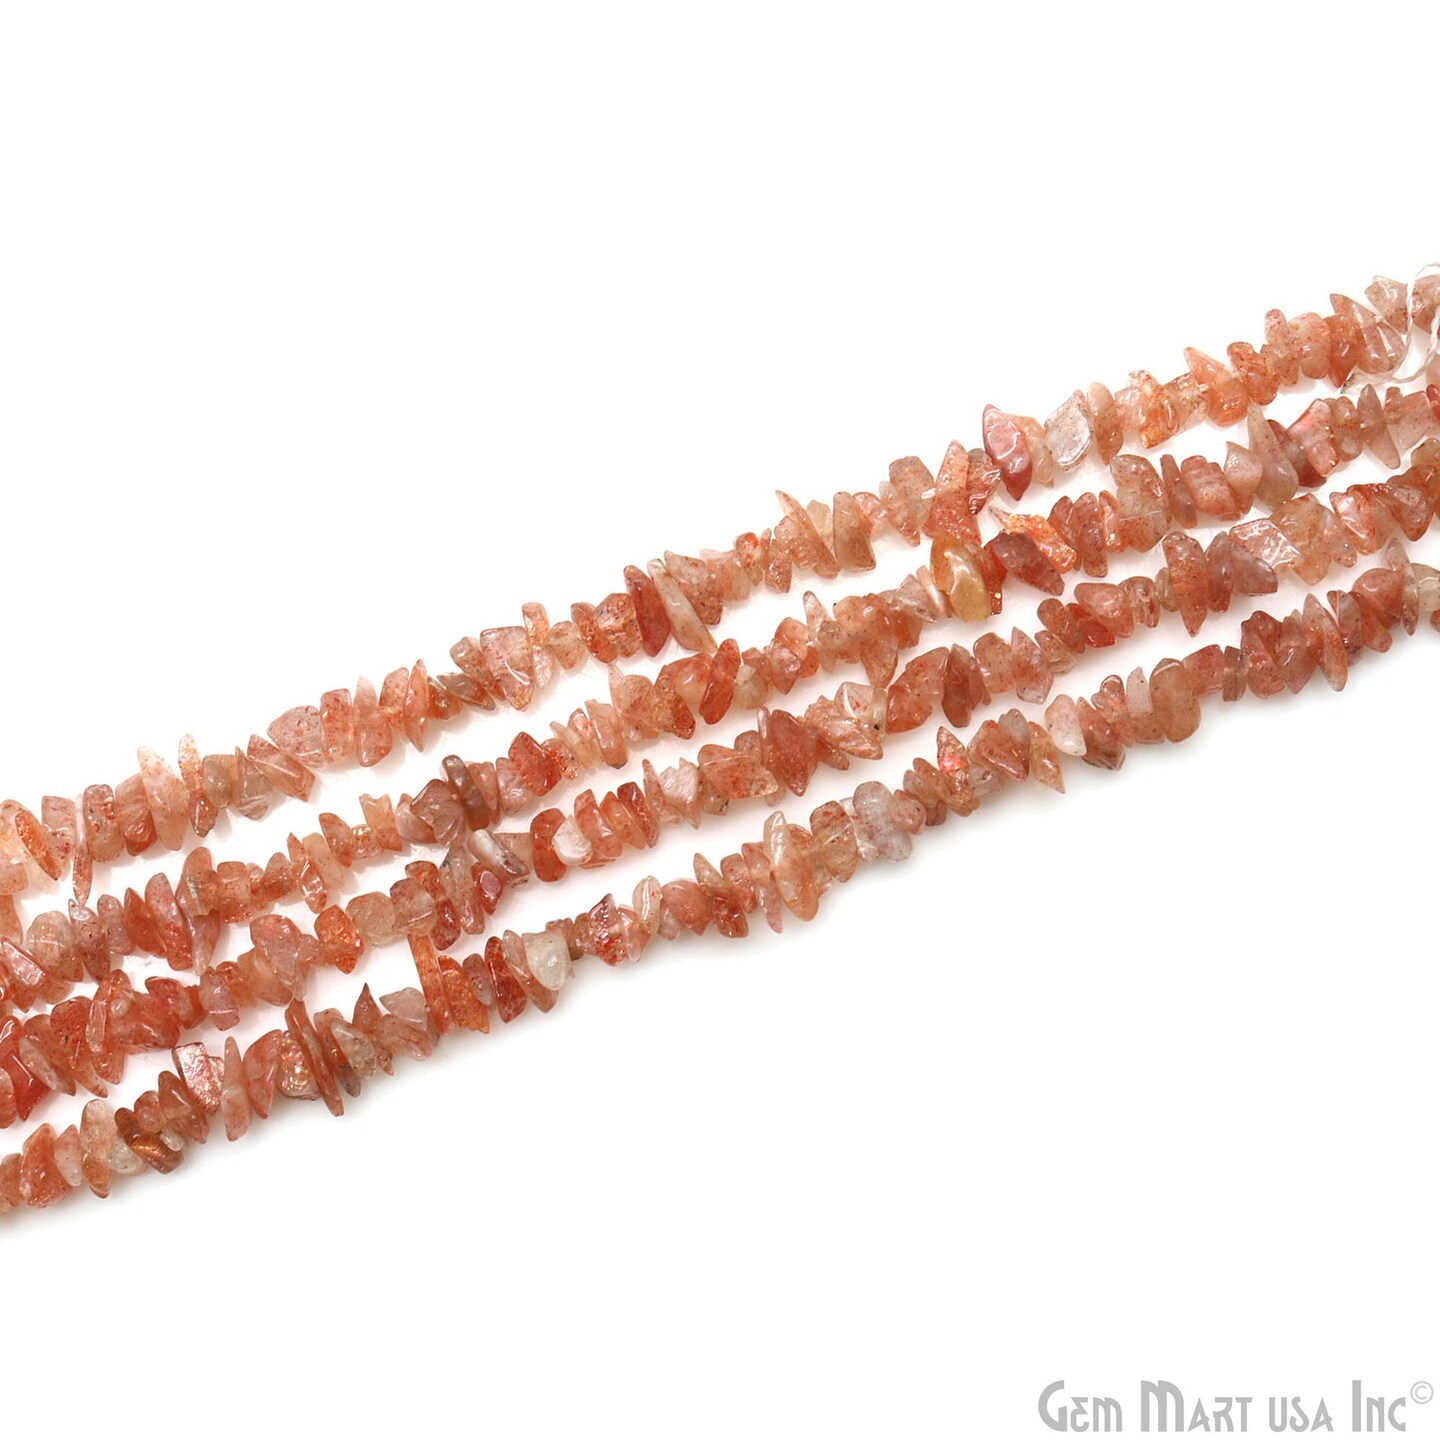 Sunstone Chip Beads, 34 Inch, Natural Chip Strands, Drilled Strung Nugget Beads, 3-7mm, Polished, GemMartUSA (CHSN-70001)